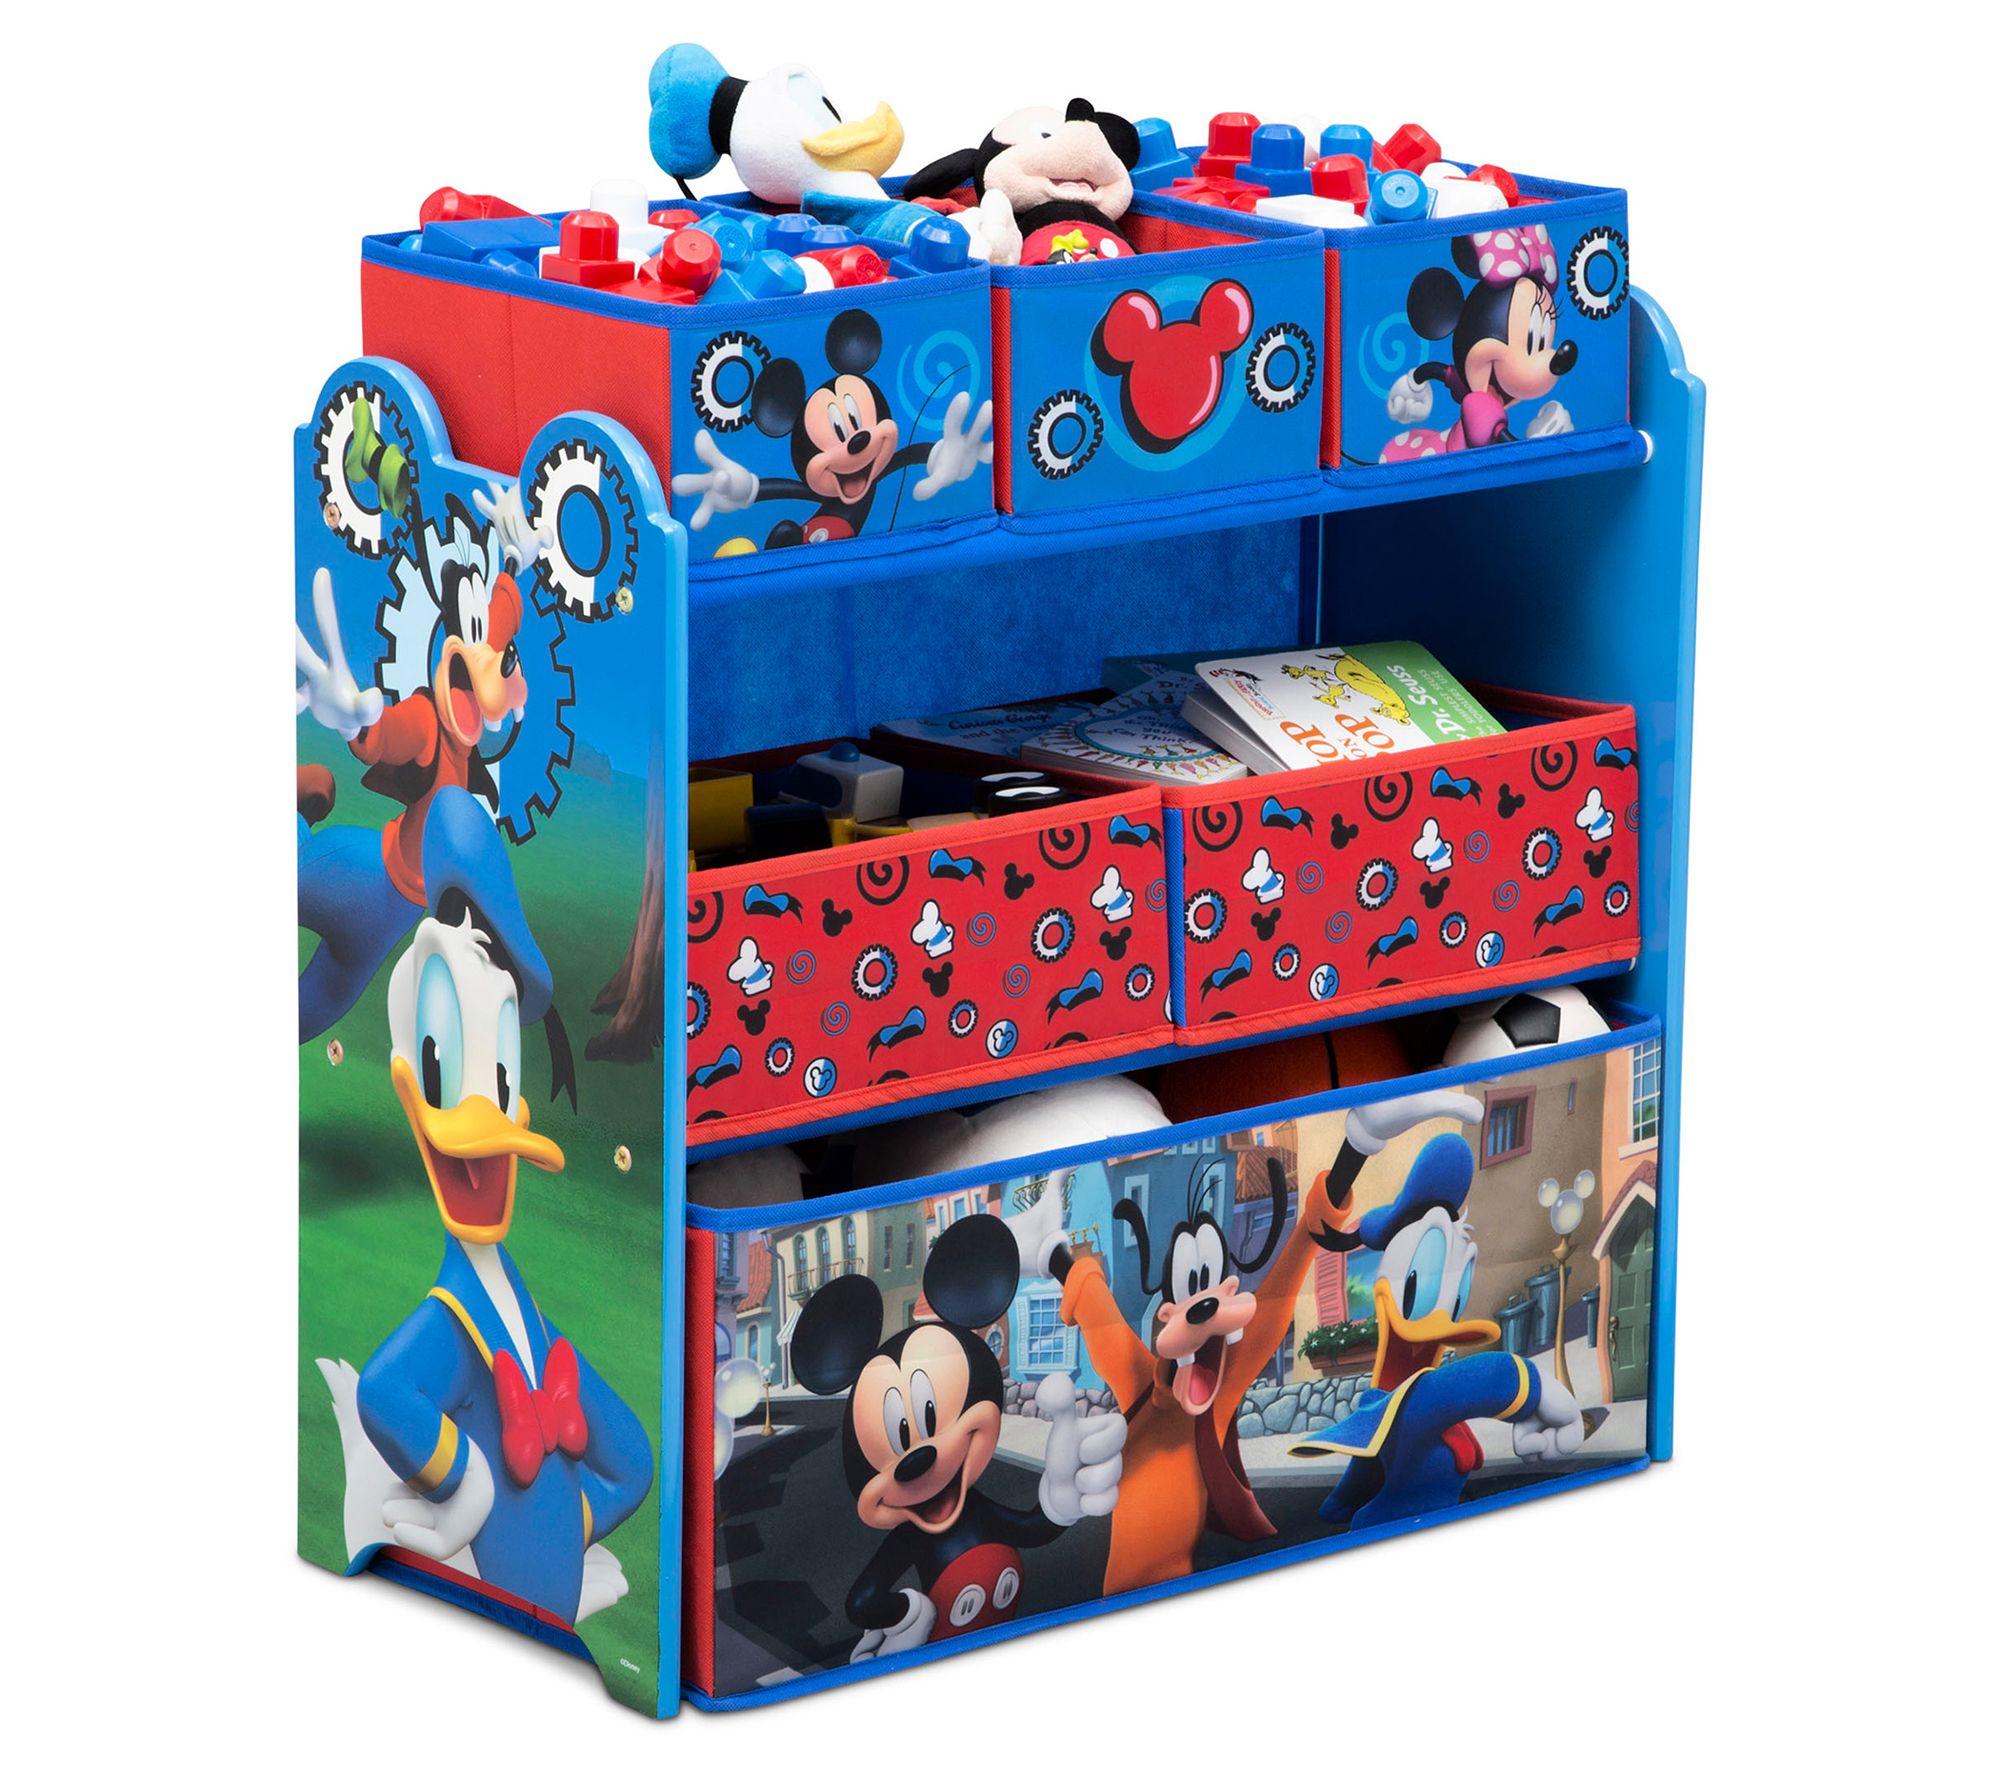 Disney Mickey Mouse 6 Bin Toy Organizer by Delta Children - QVC.com